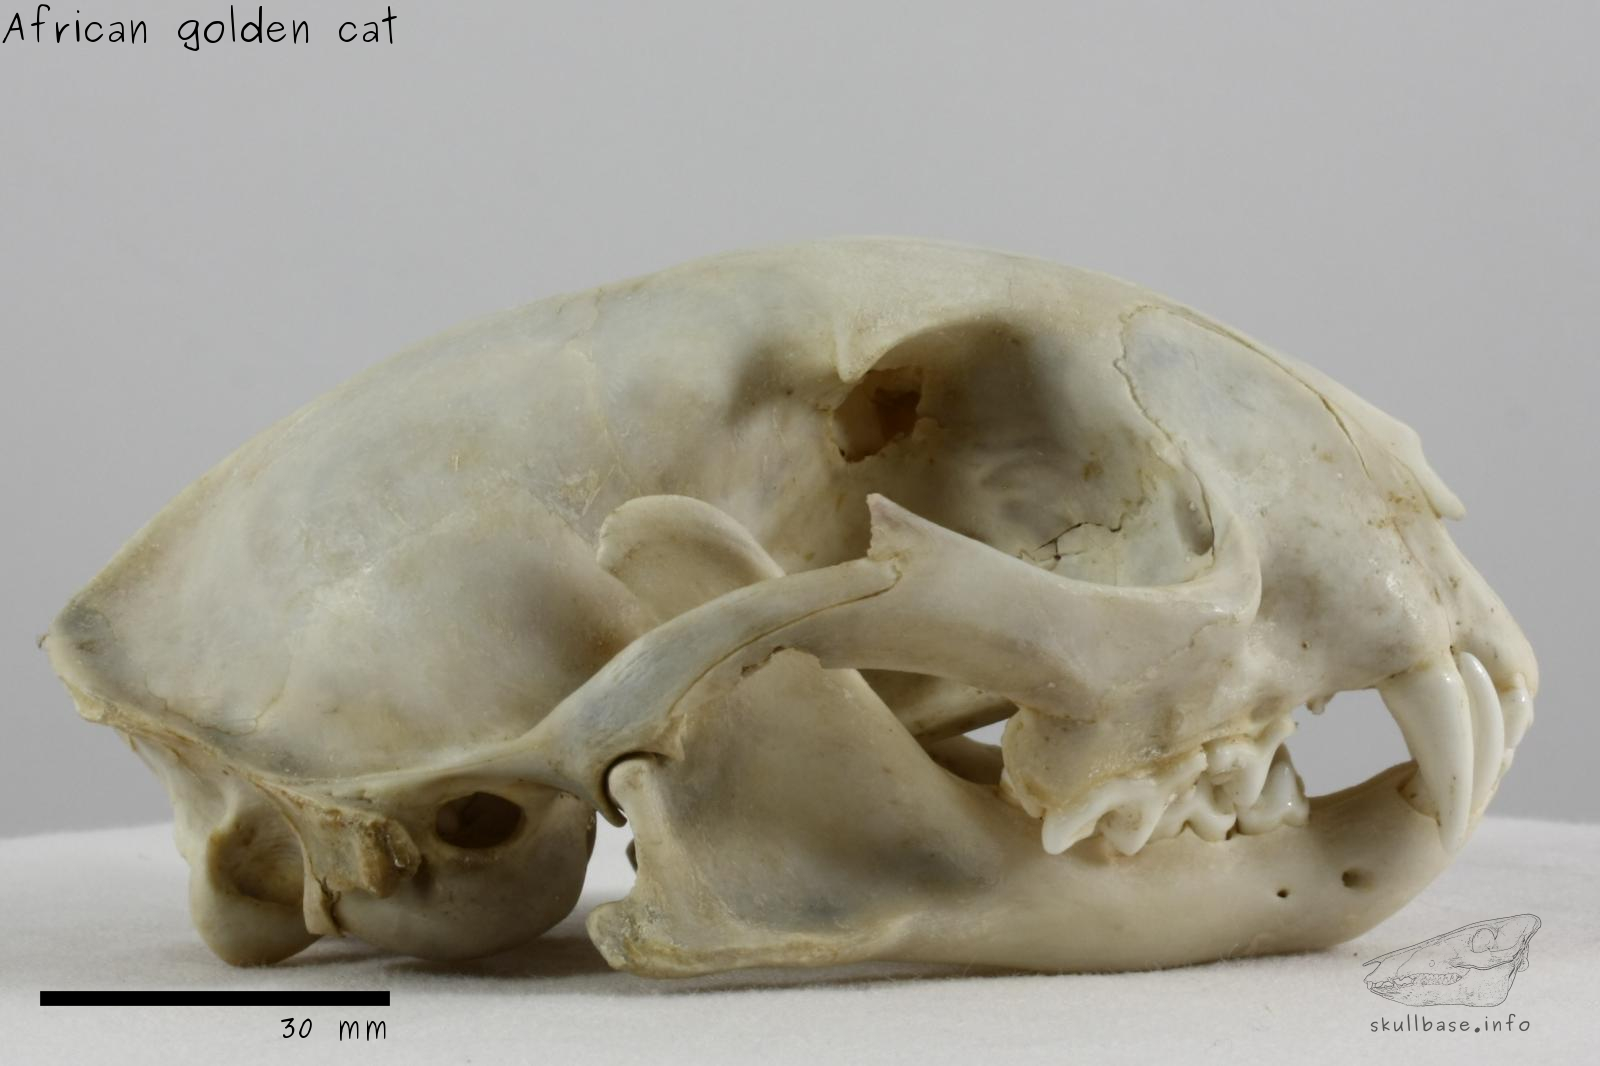 African golden cat (Caracal aurata) skull lateral view